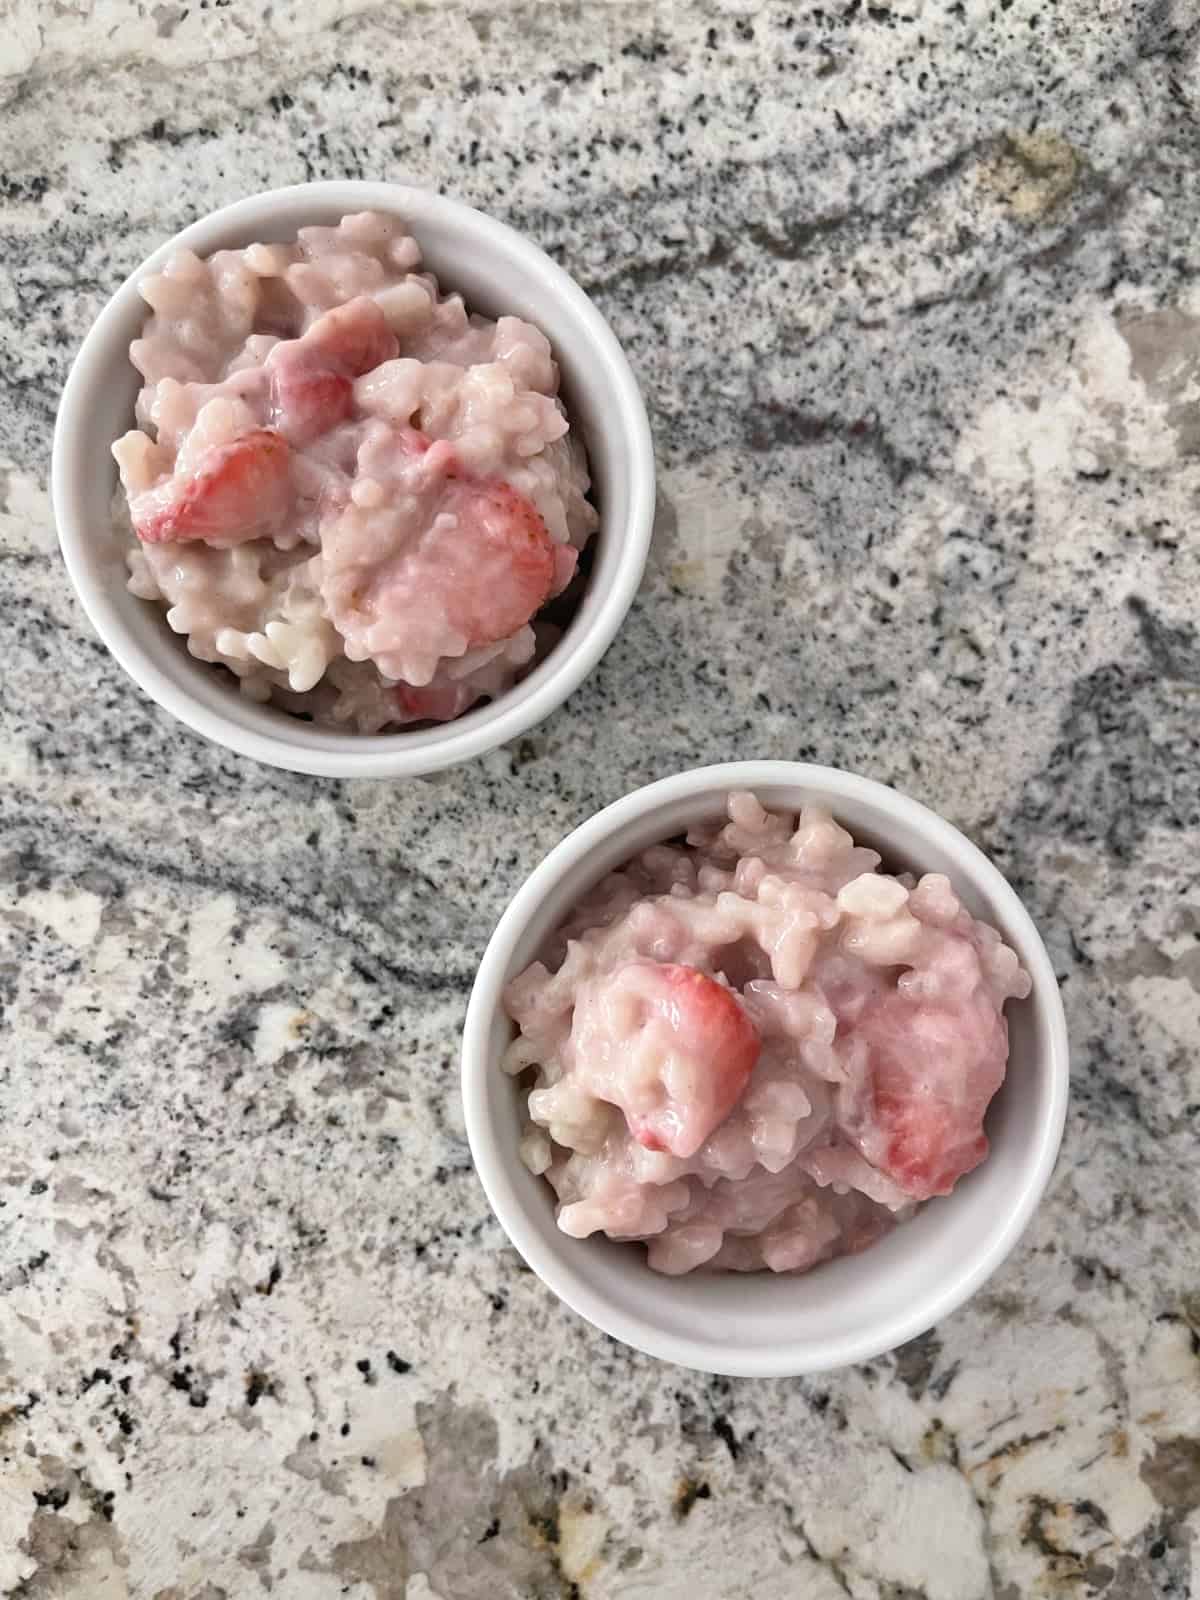 Strawberry rice pudding in two small white ramekins on granite.